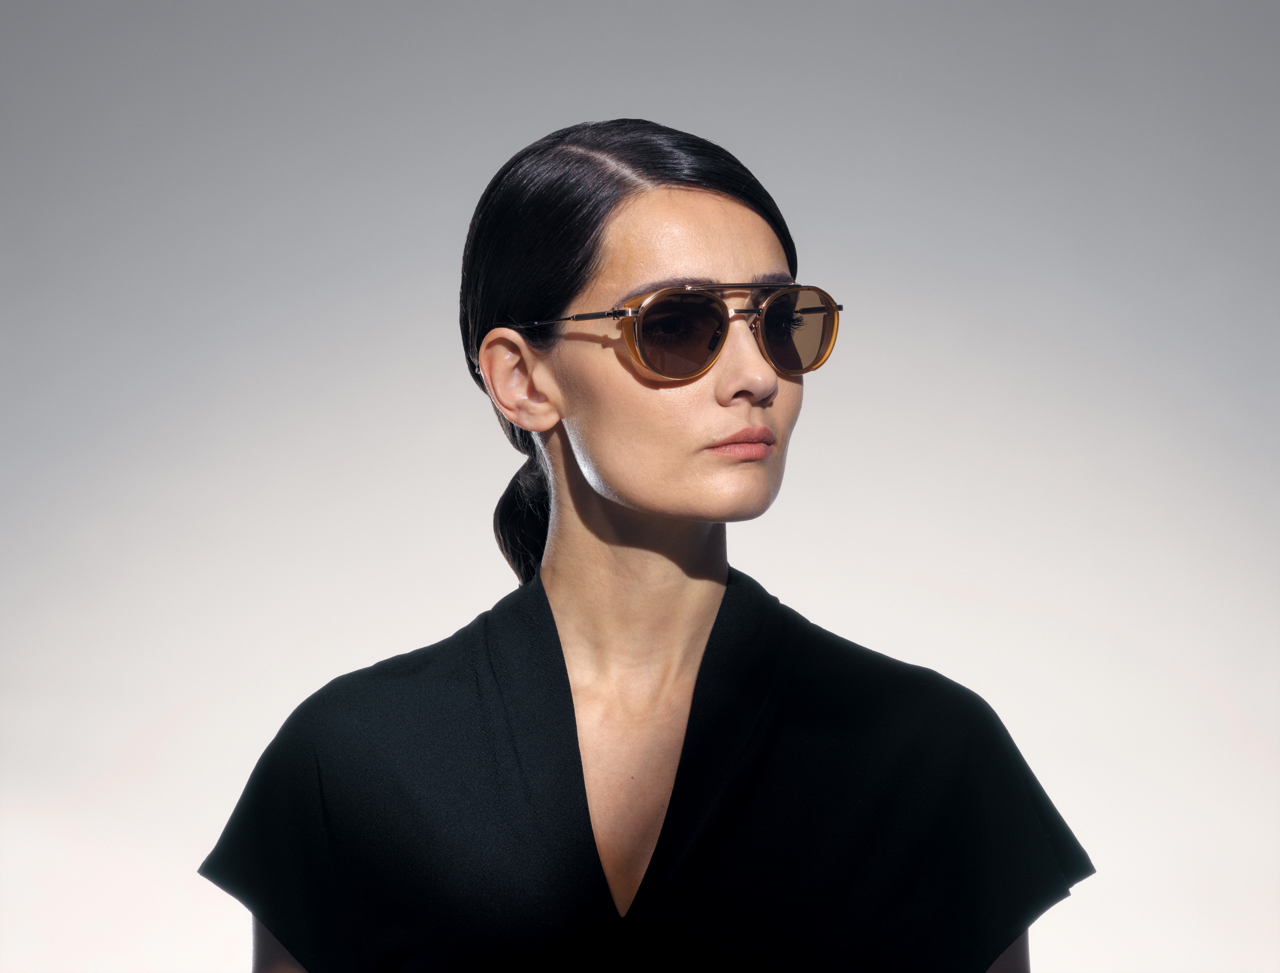 akoni skymapper sunglasses lifestyle side female